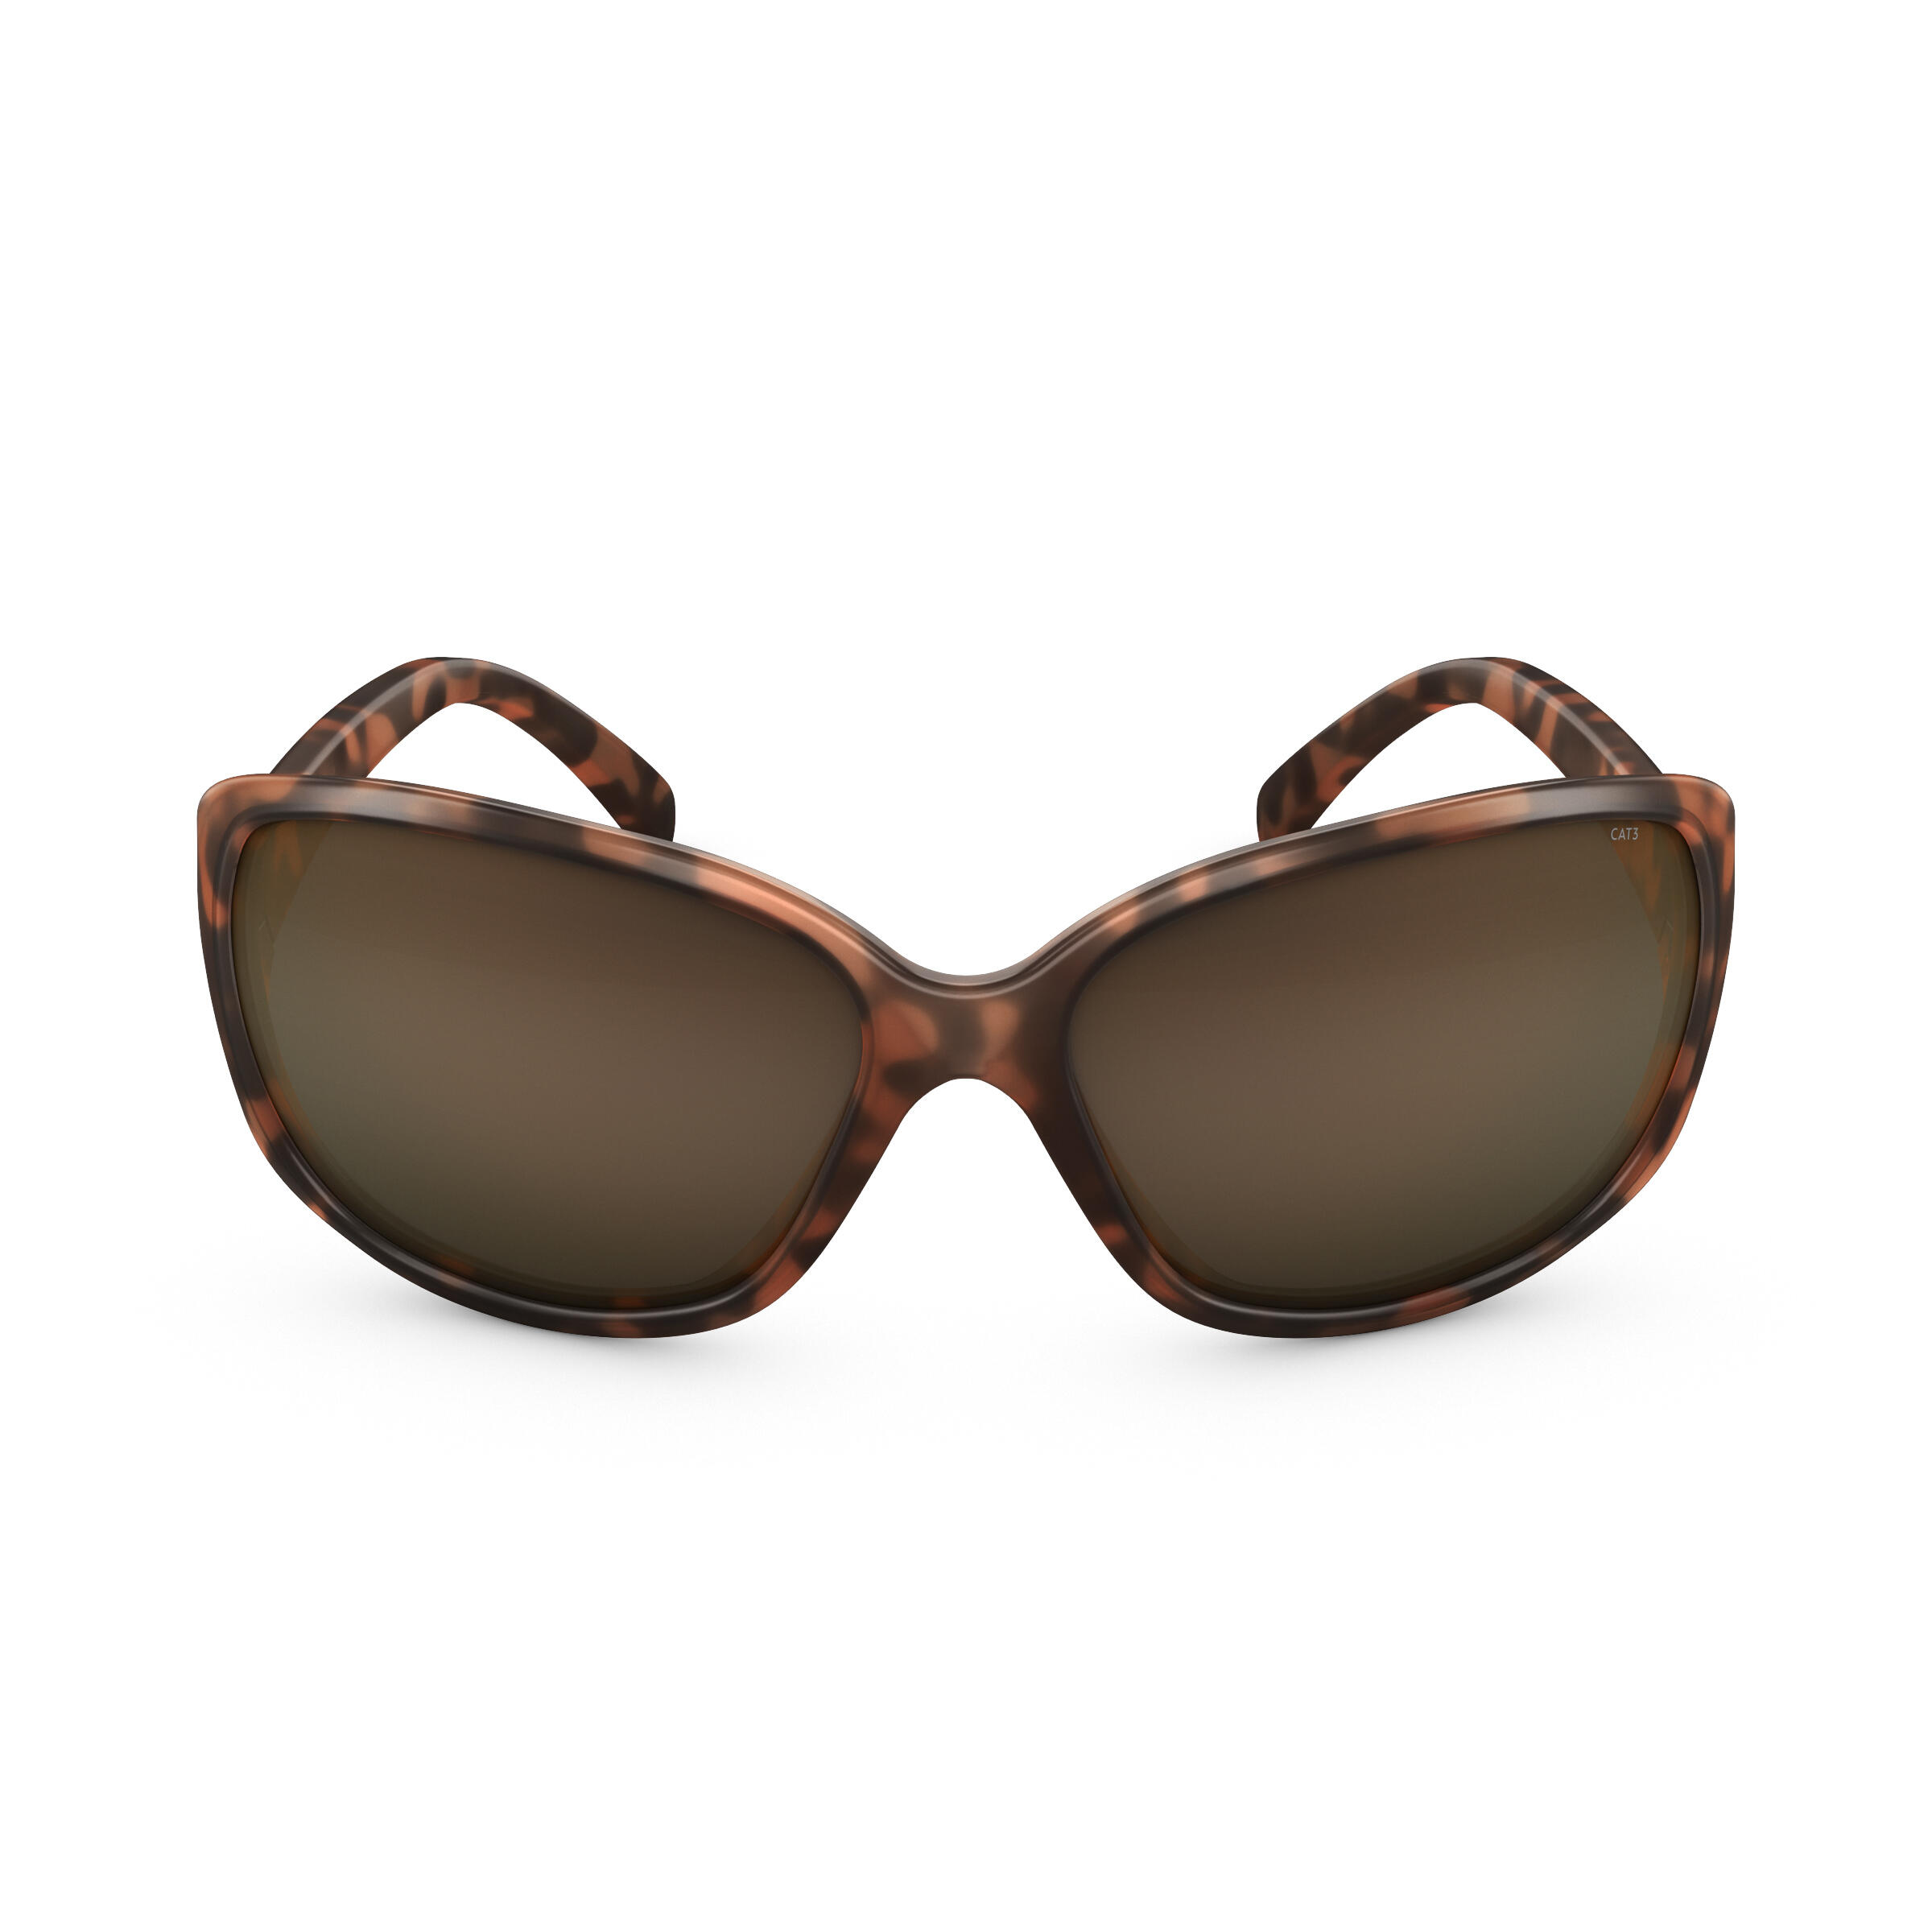 Kris Van Assche Sunglasses Double Bridge Round Apricot and Brown – Watches  & Crystals